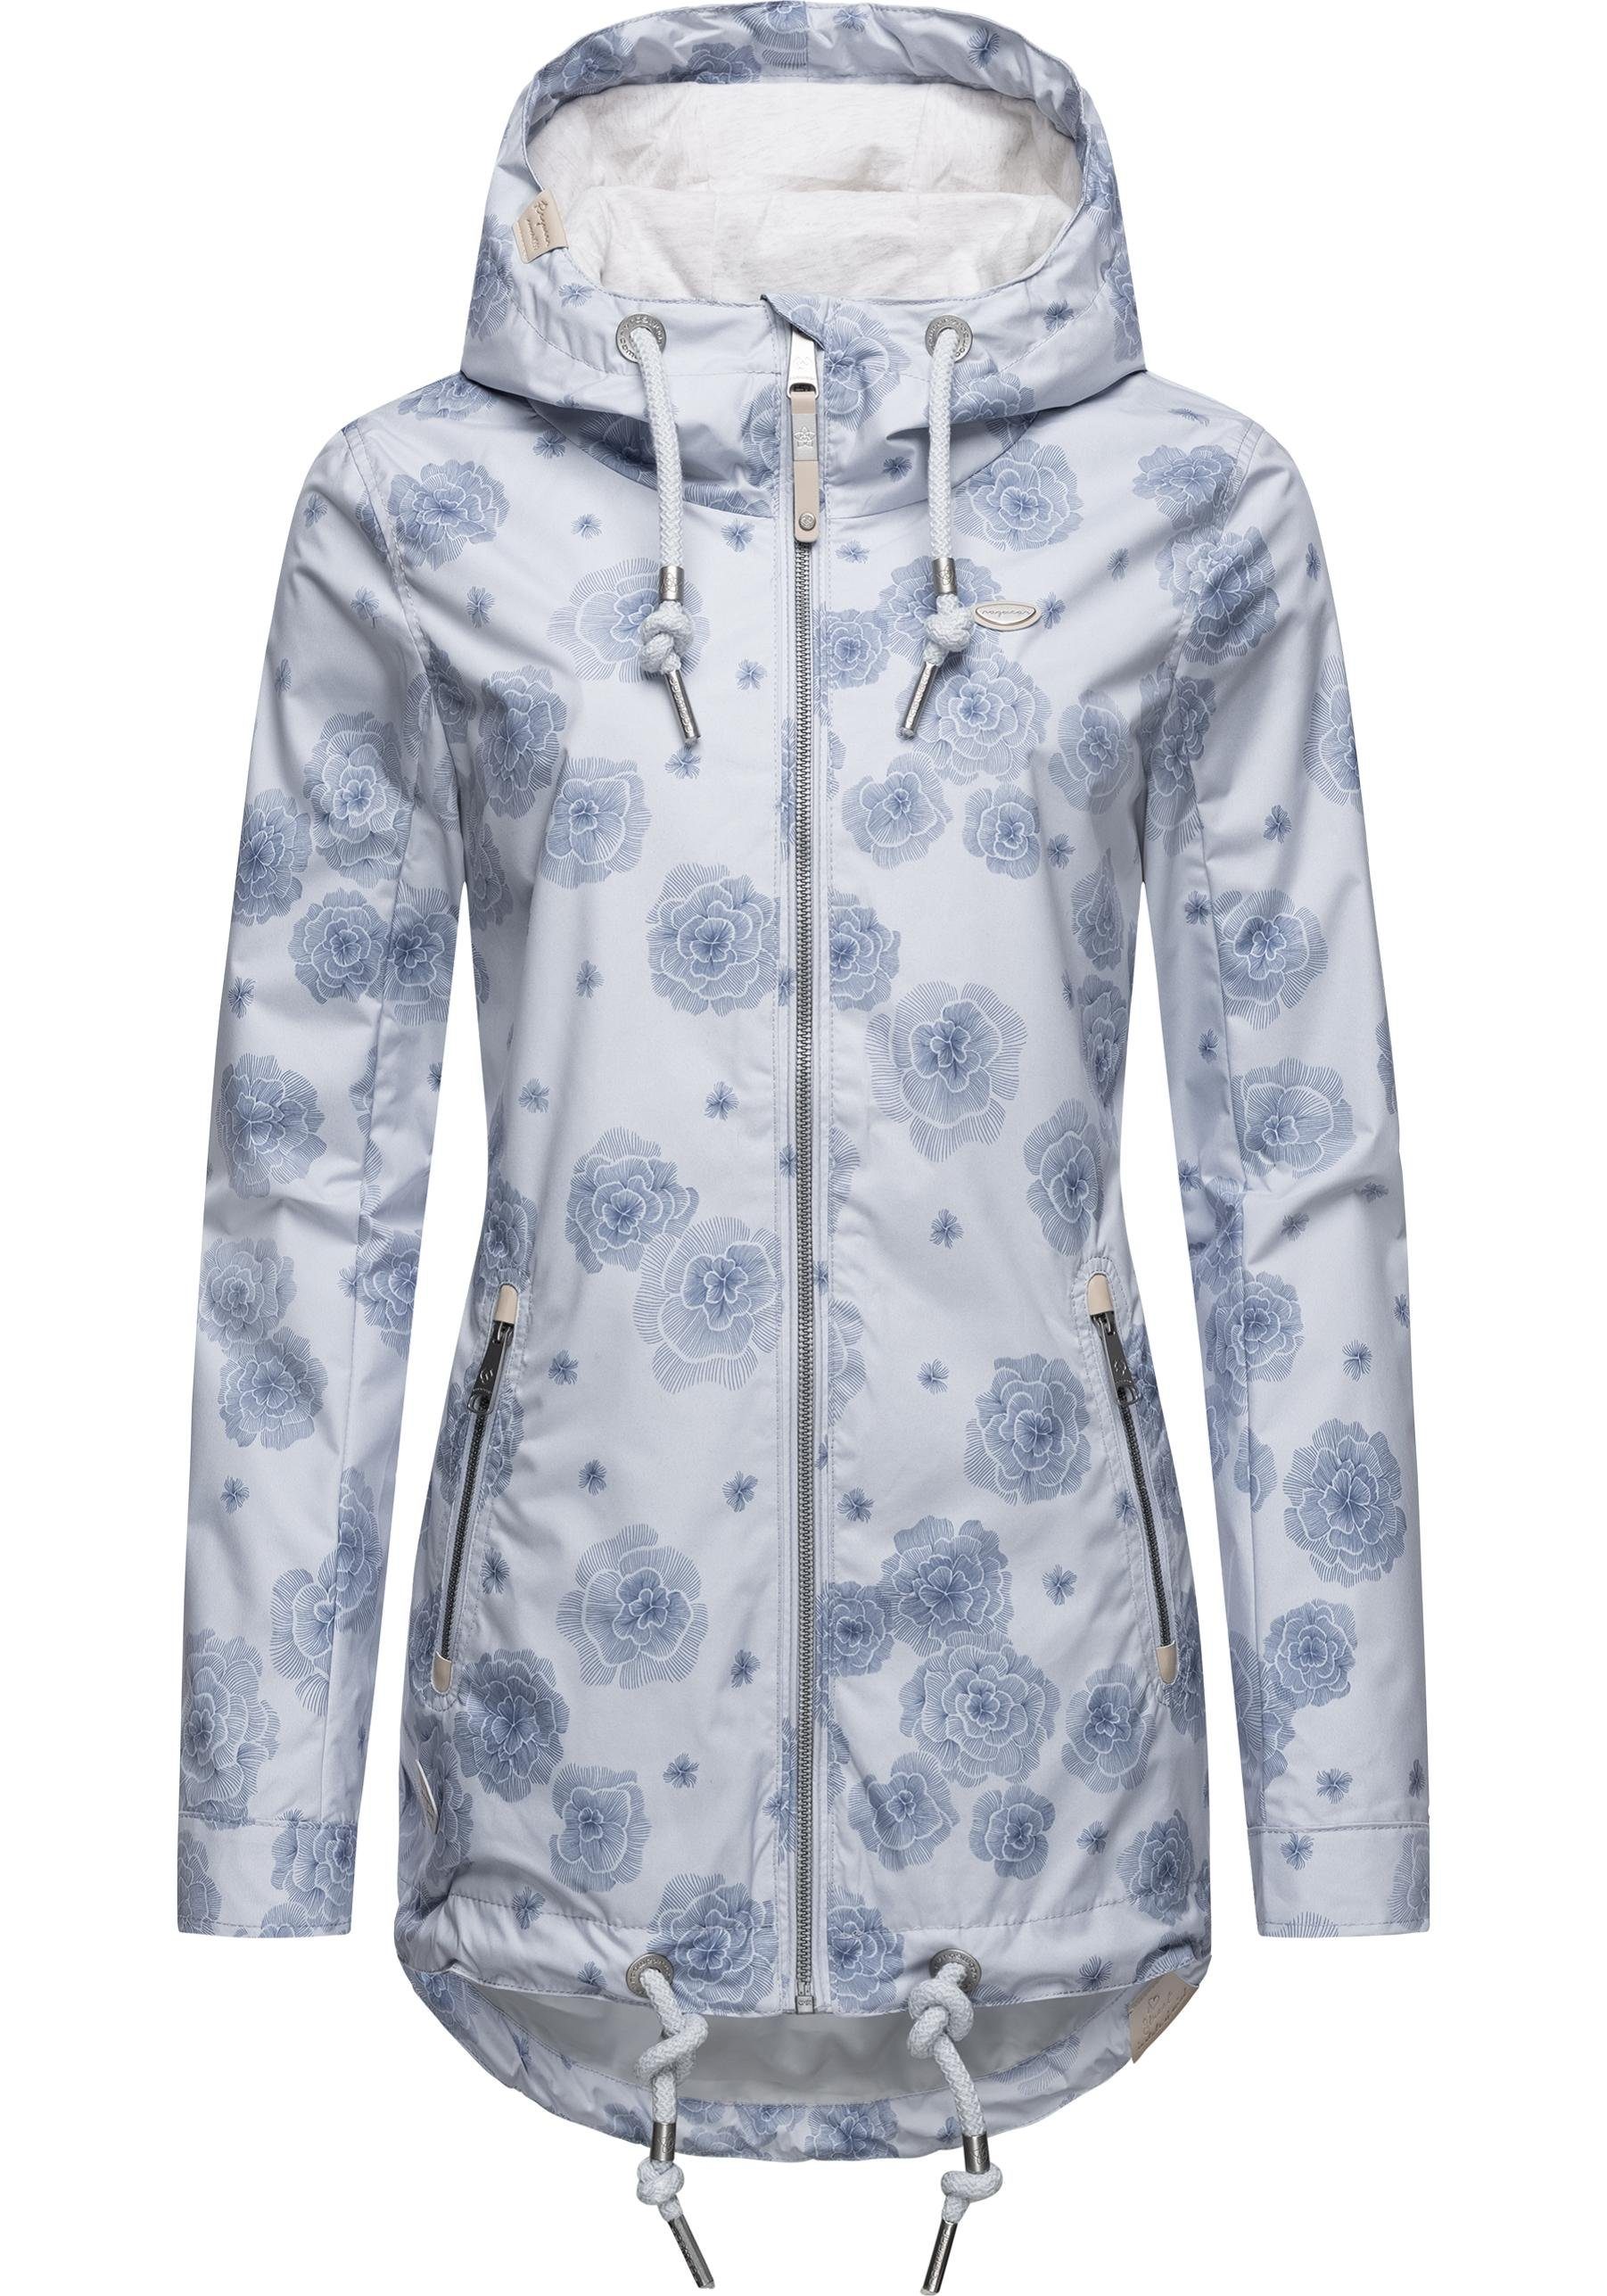 Ragwear Outdoorjacke Zuzka Flower stylische Übergangsjacke mit großer Kapuze hellblau | Übergangsjacken